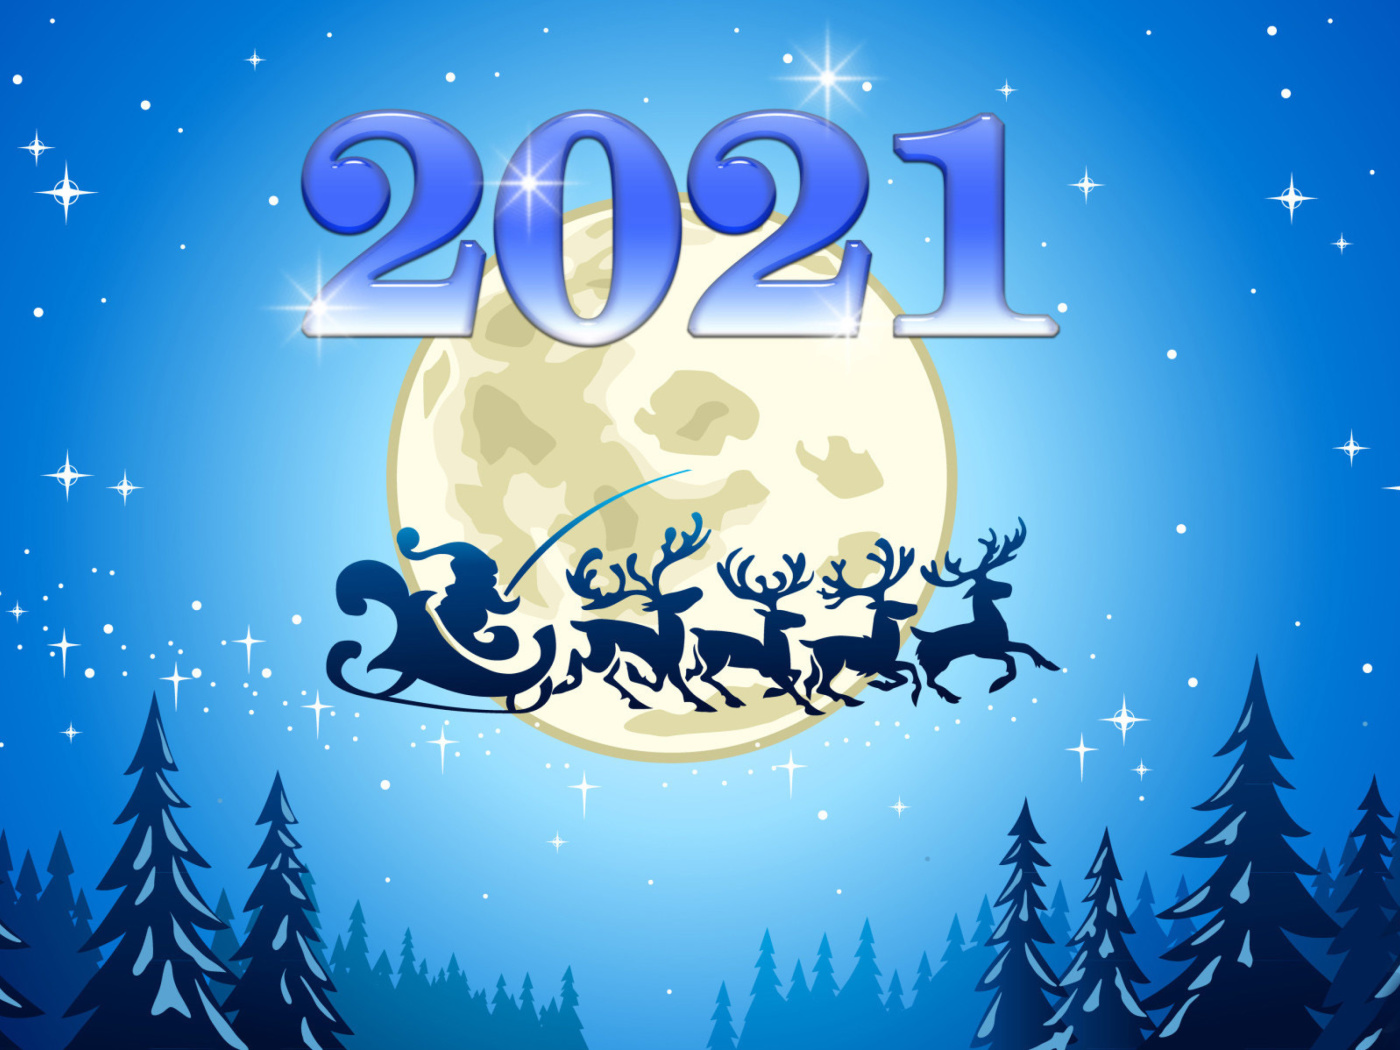 2021 New Year Night wallpaper 1400x1050